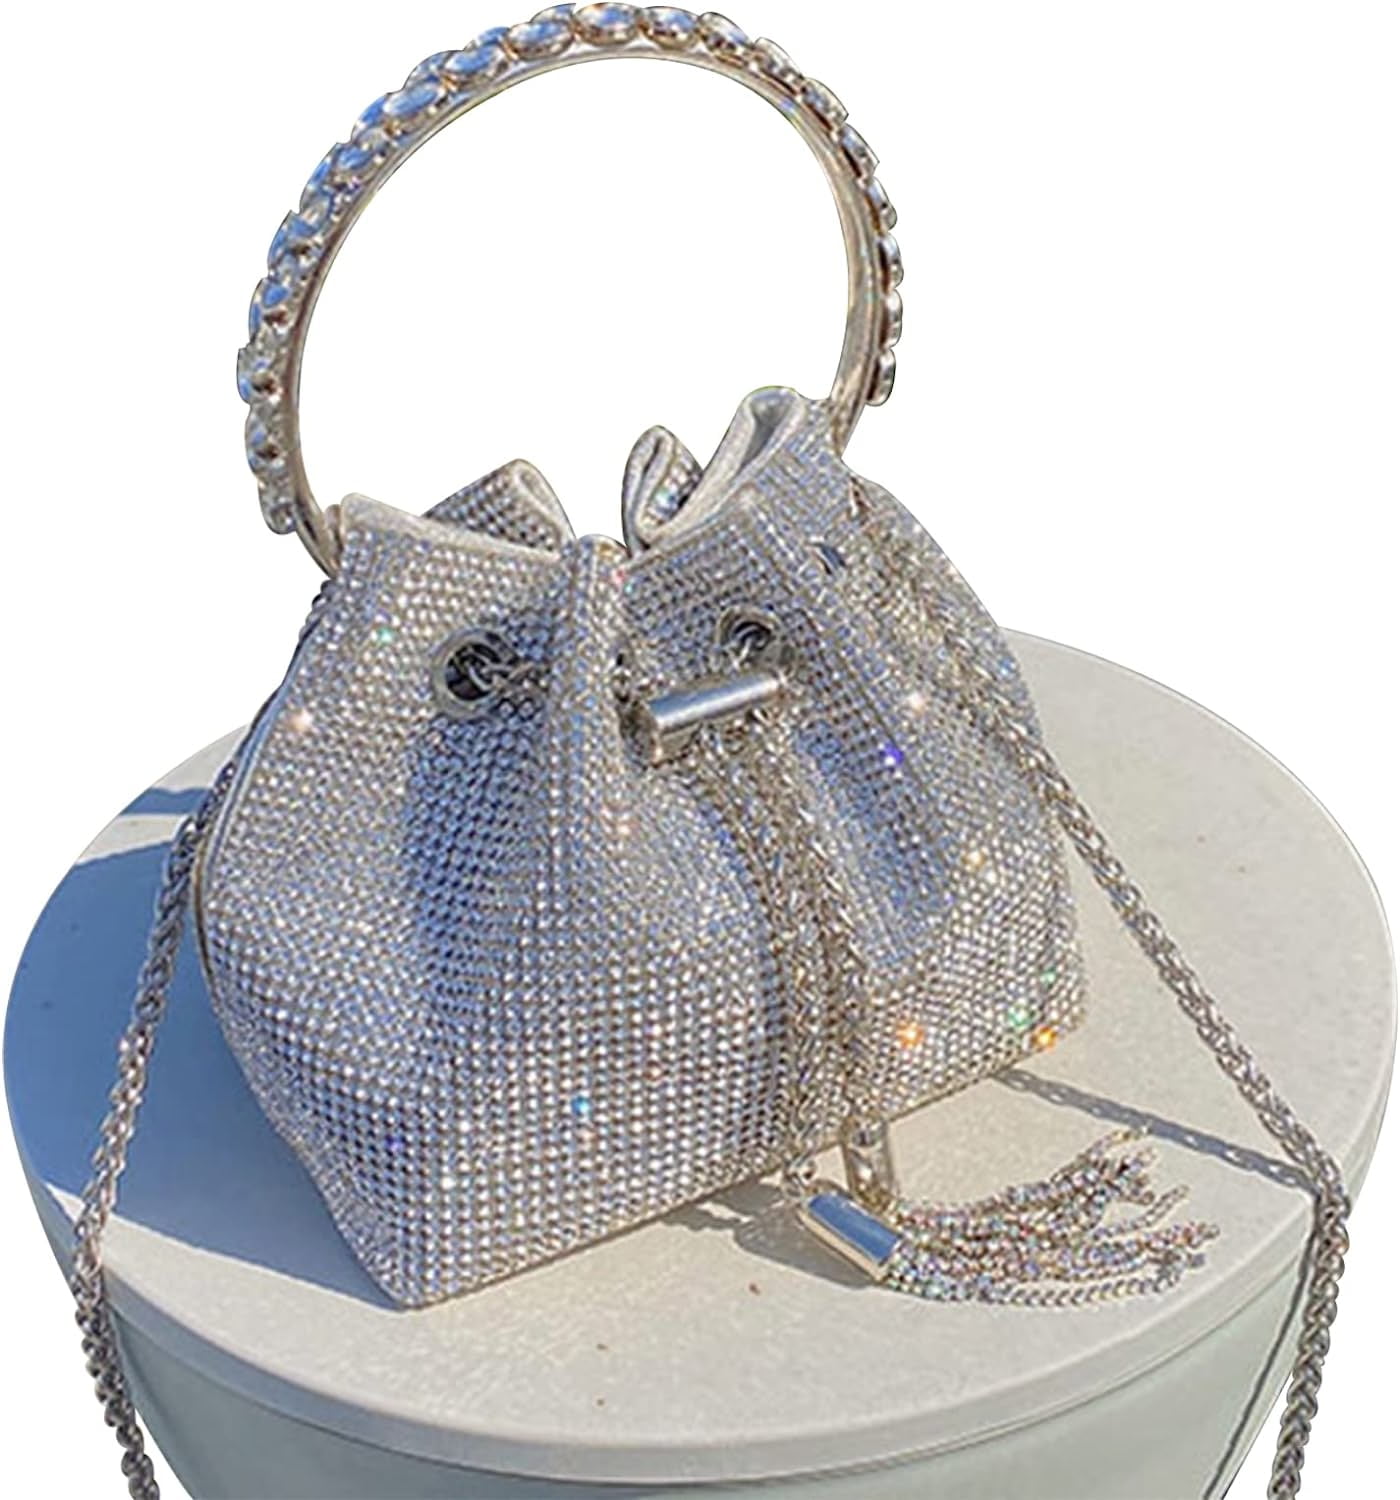 2022 Upgrade Rhinestone Evening Bag Silver Purse Sparkly Diamond Silver Clutch Purses for Women Party Club Wedding 641dbf0b 4d6b 4e1c 9eb9 69b30dfadef7.d76eb321b9cdb7170ad604f25f49da9f